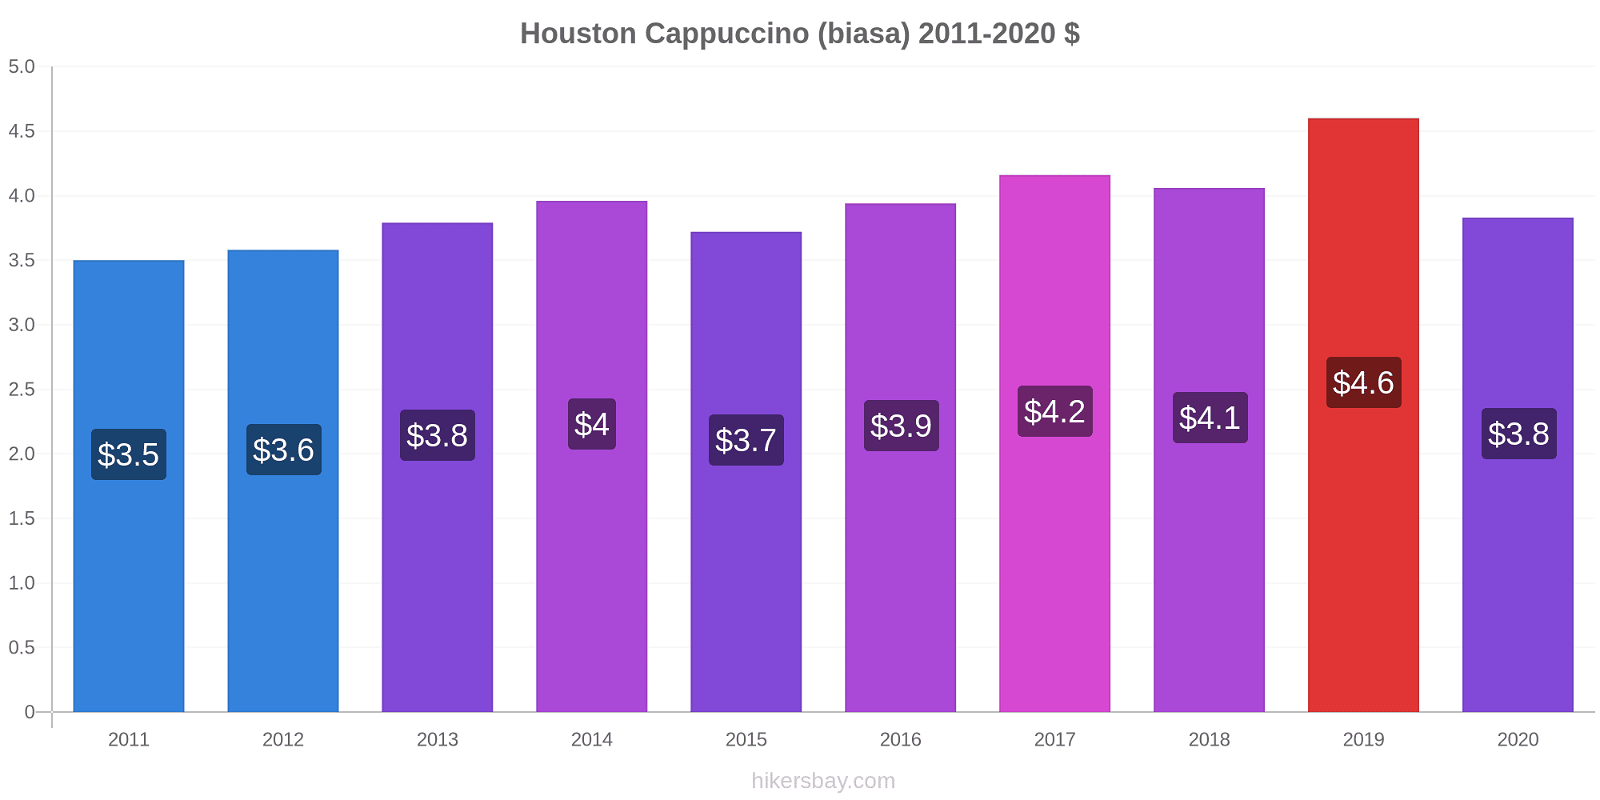 Houston perubahan harga Cappuccino (biasa) hikersbay.com